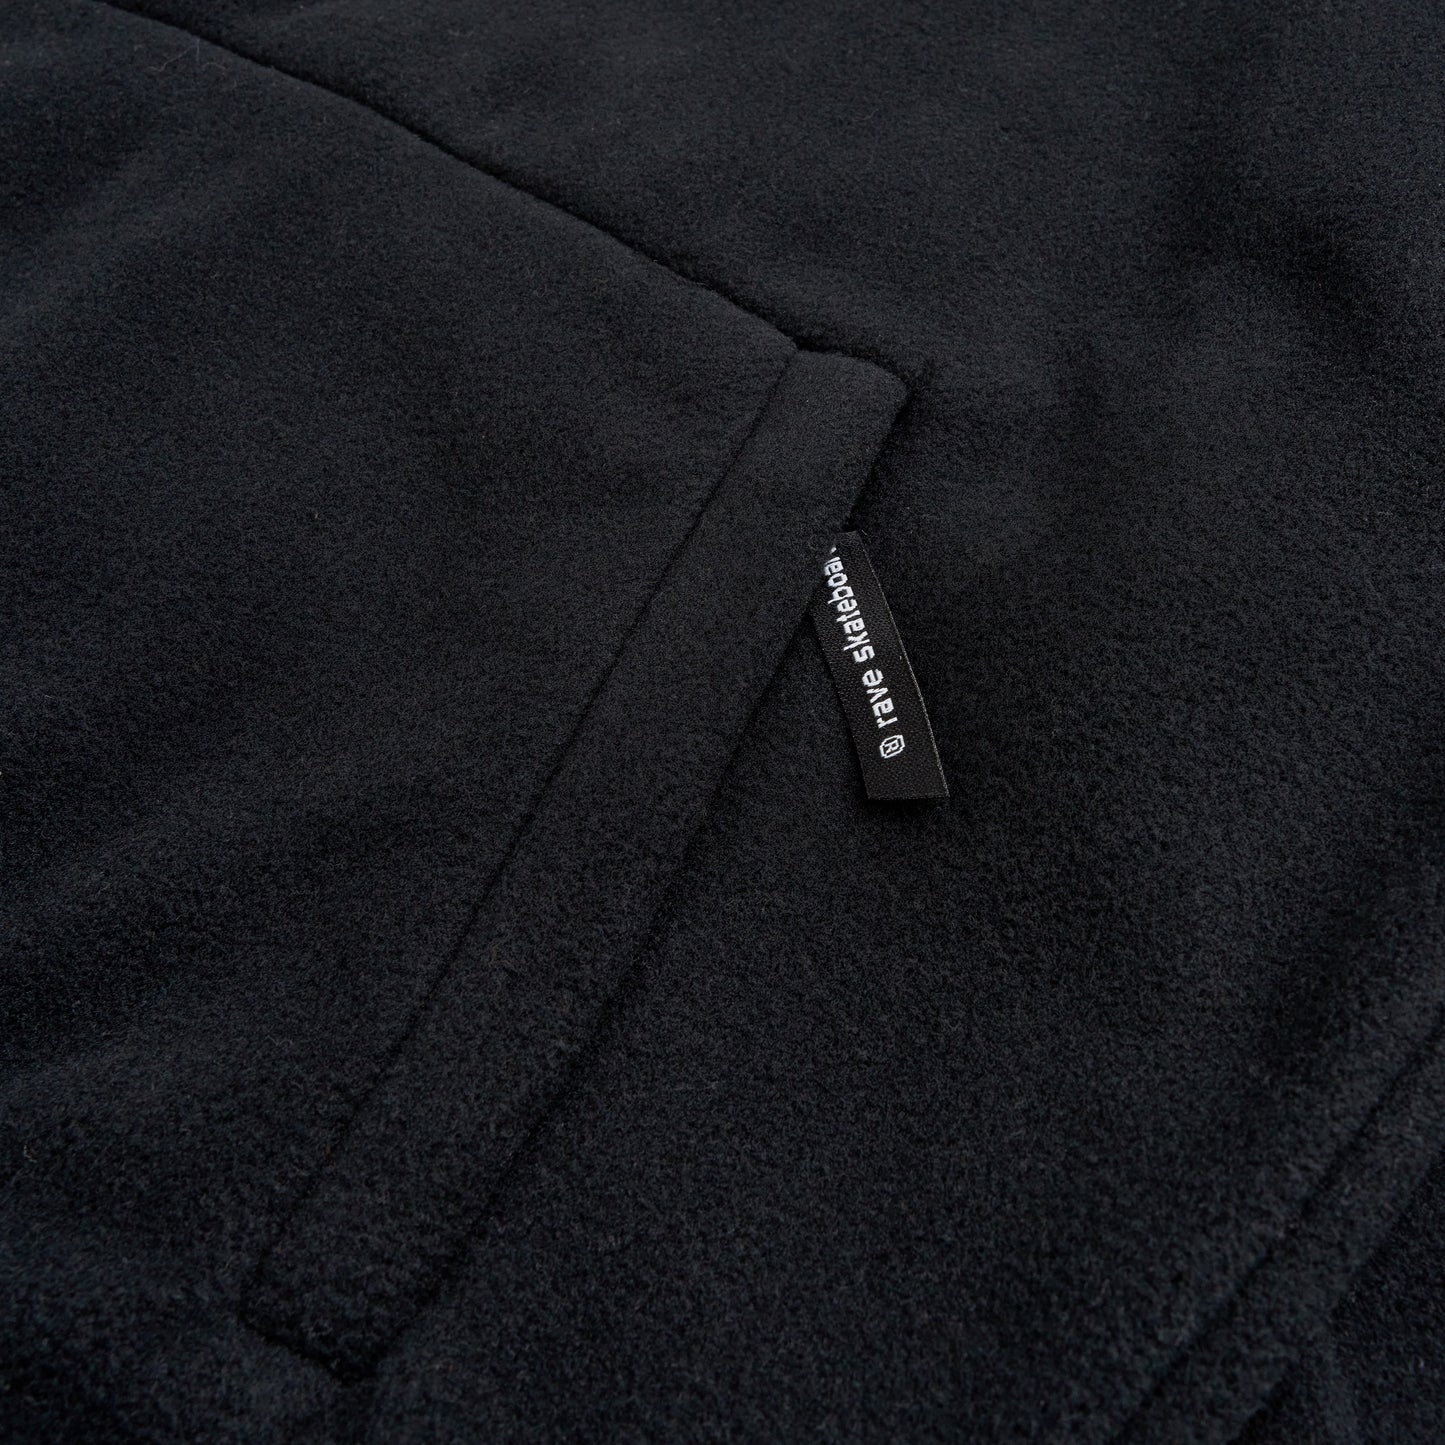 F&B polar fleece hoodie black